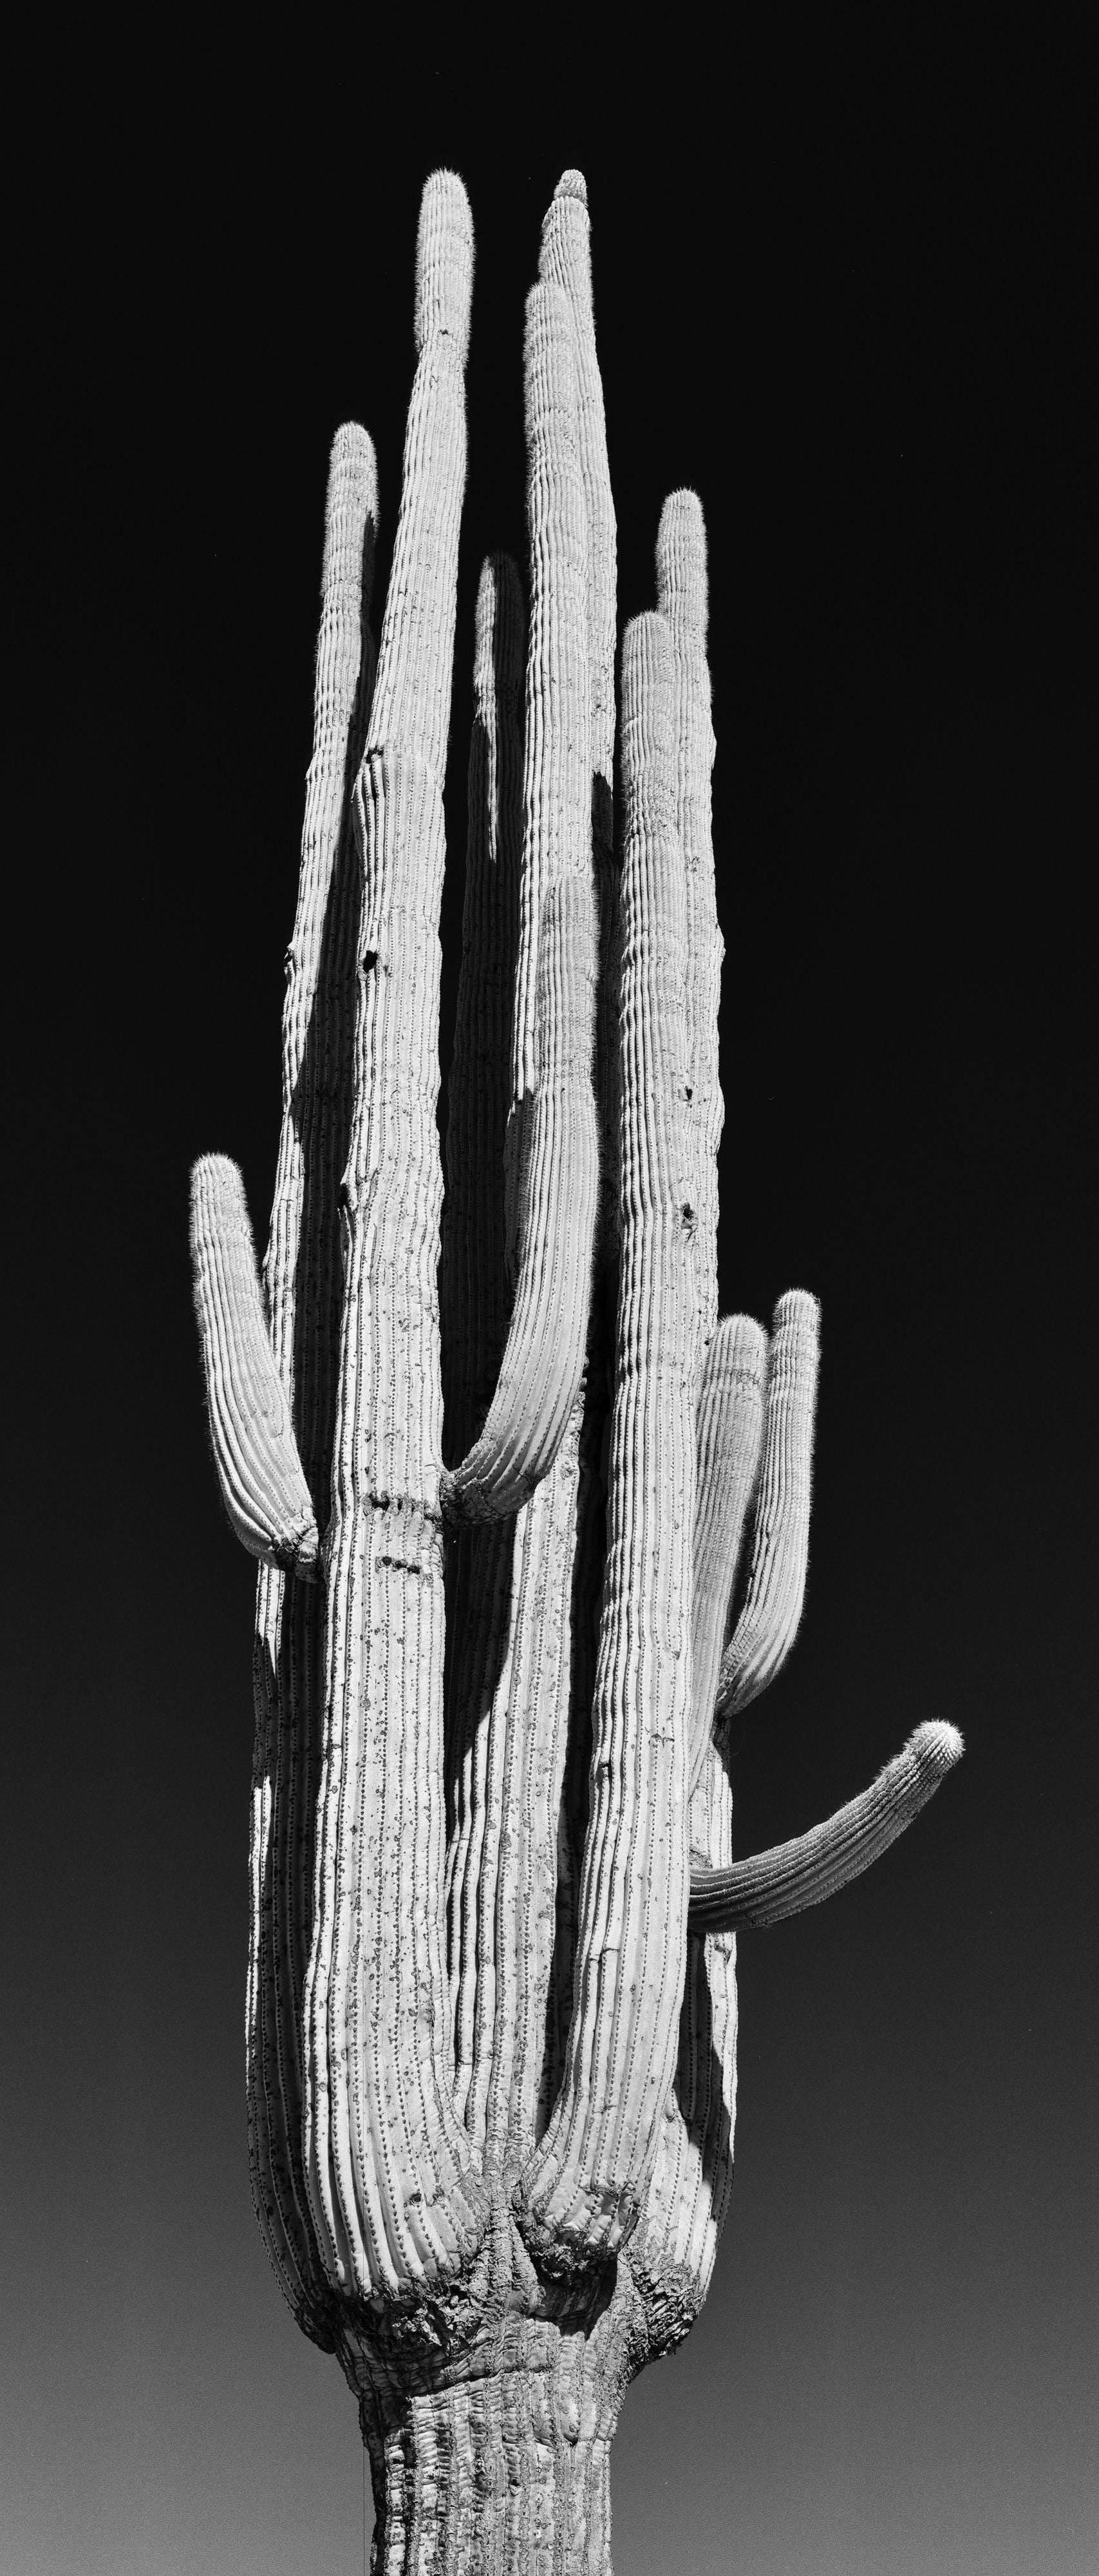 Cody S. Brothers Landscape Photograph - Panoramic Landscape B&W Photography: 'Saguaro'